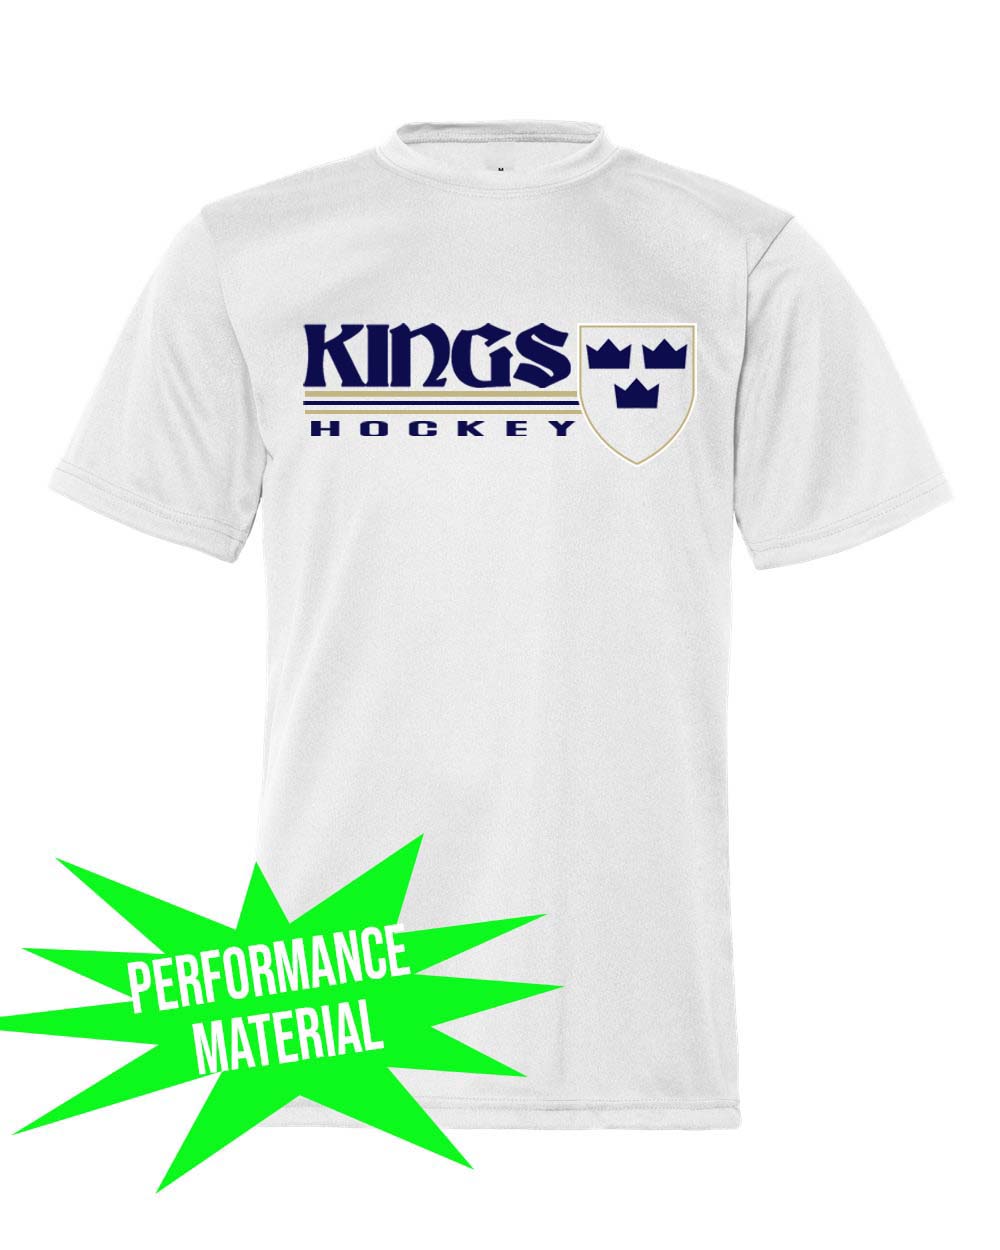 Kings Hockey Performance Material design 3 T-Shirt